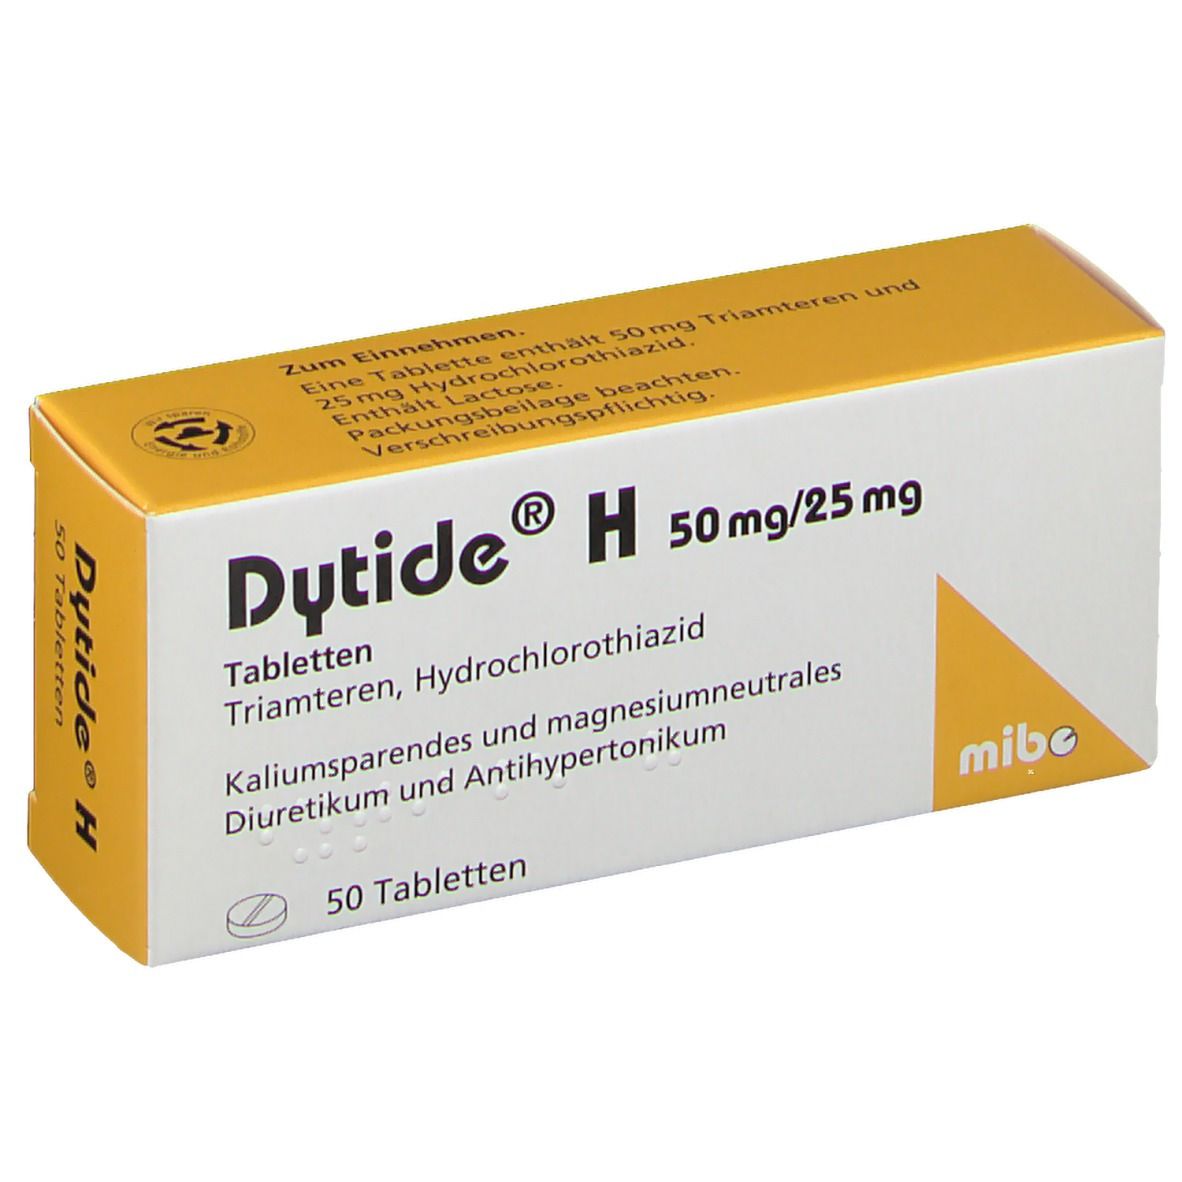 Dytide H 50 mg/25 mg